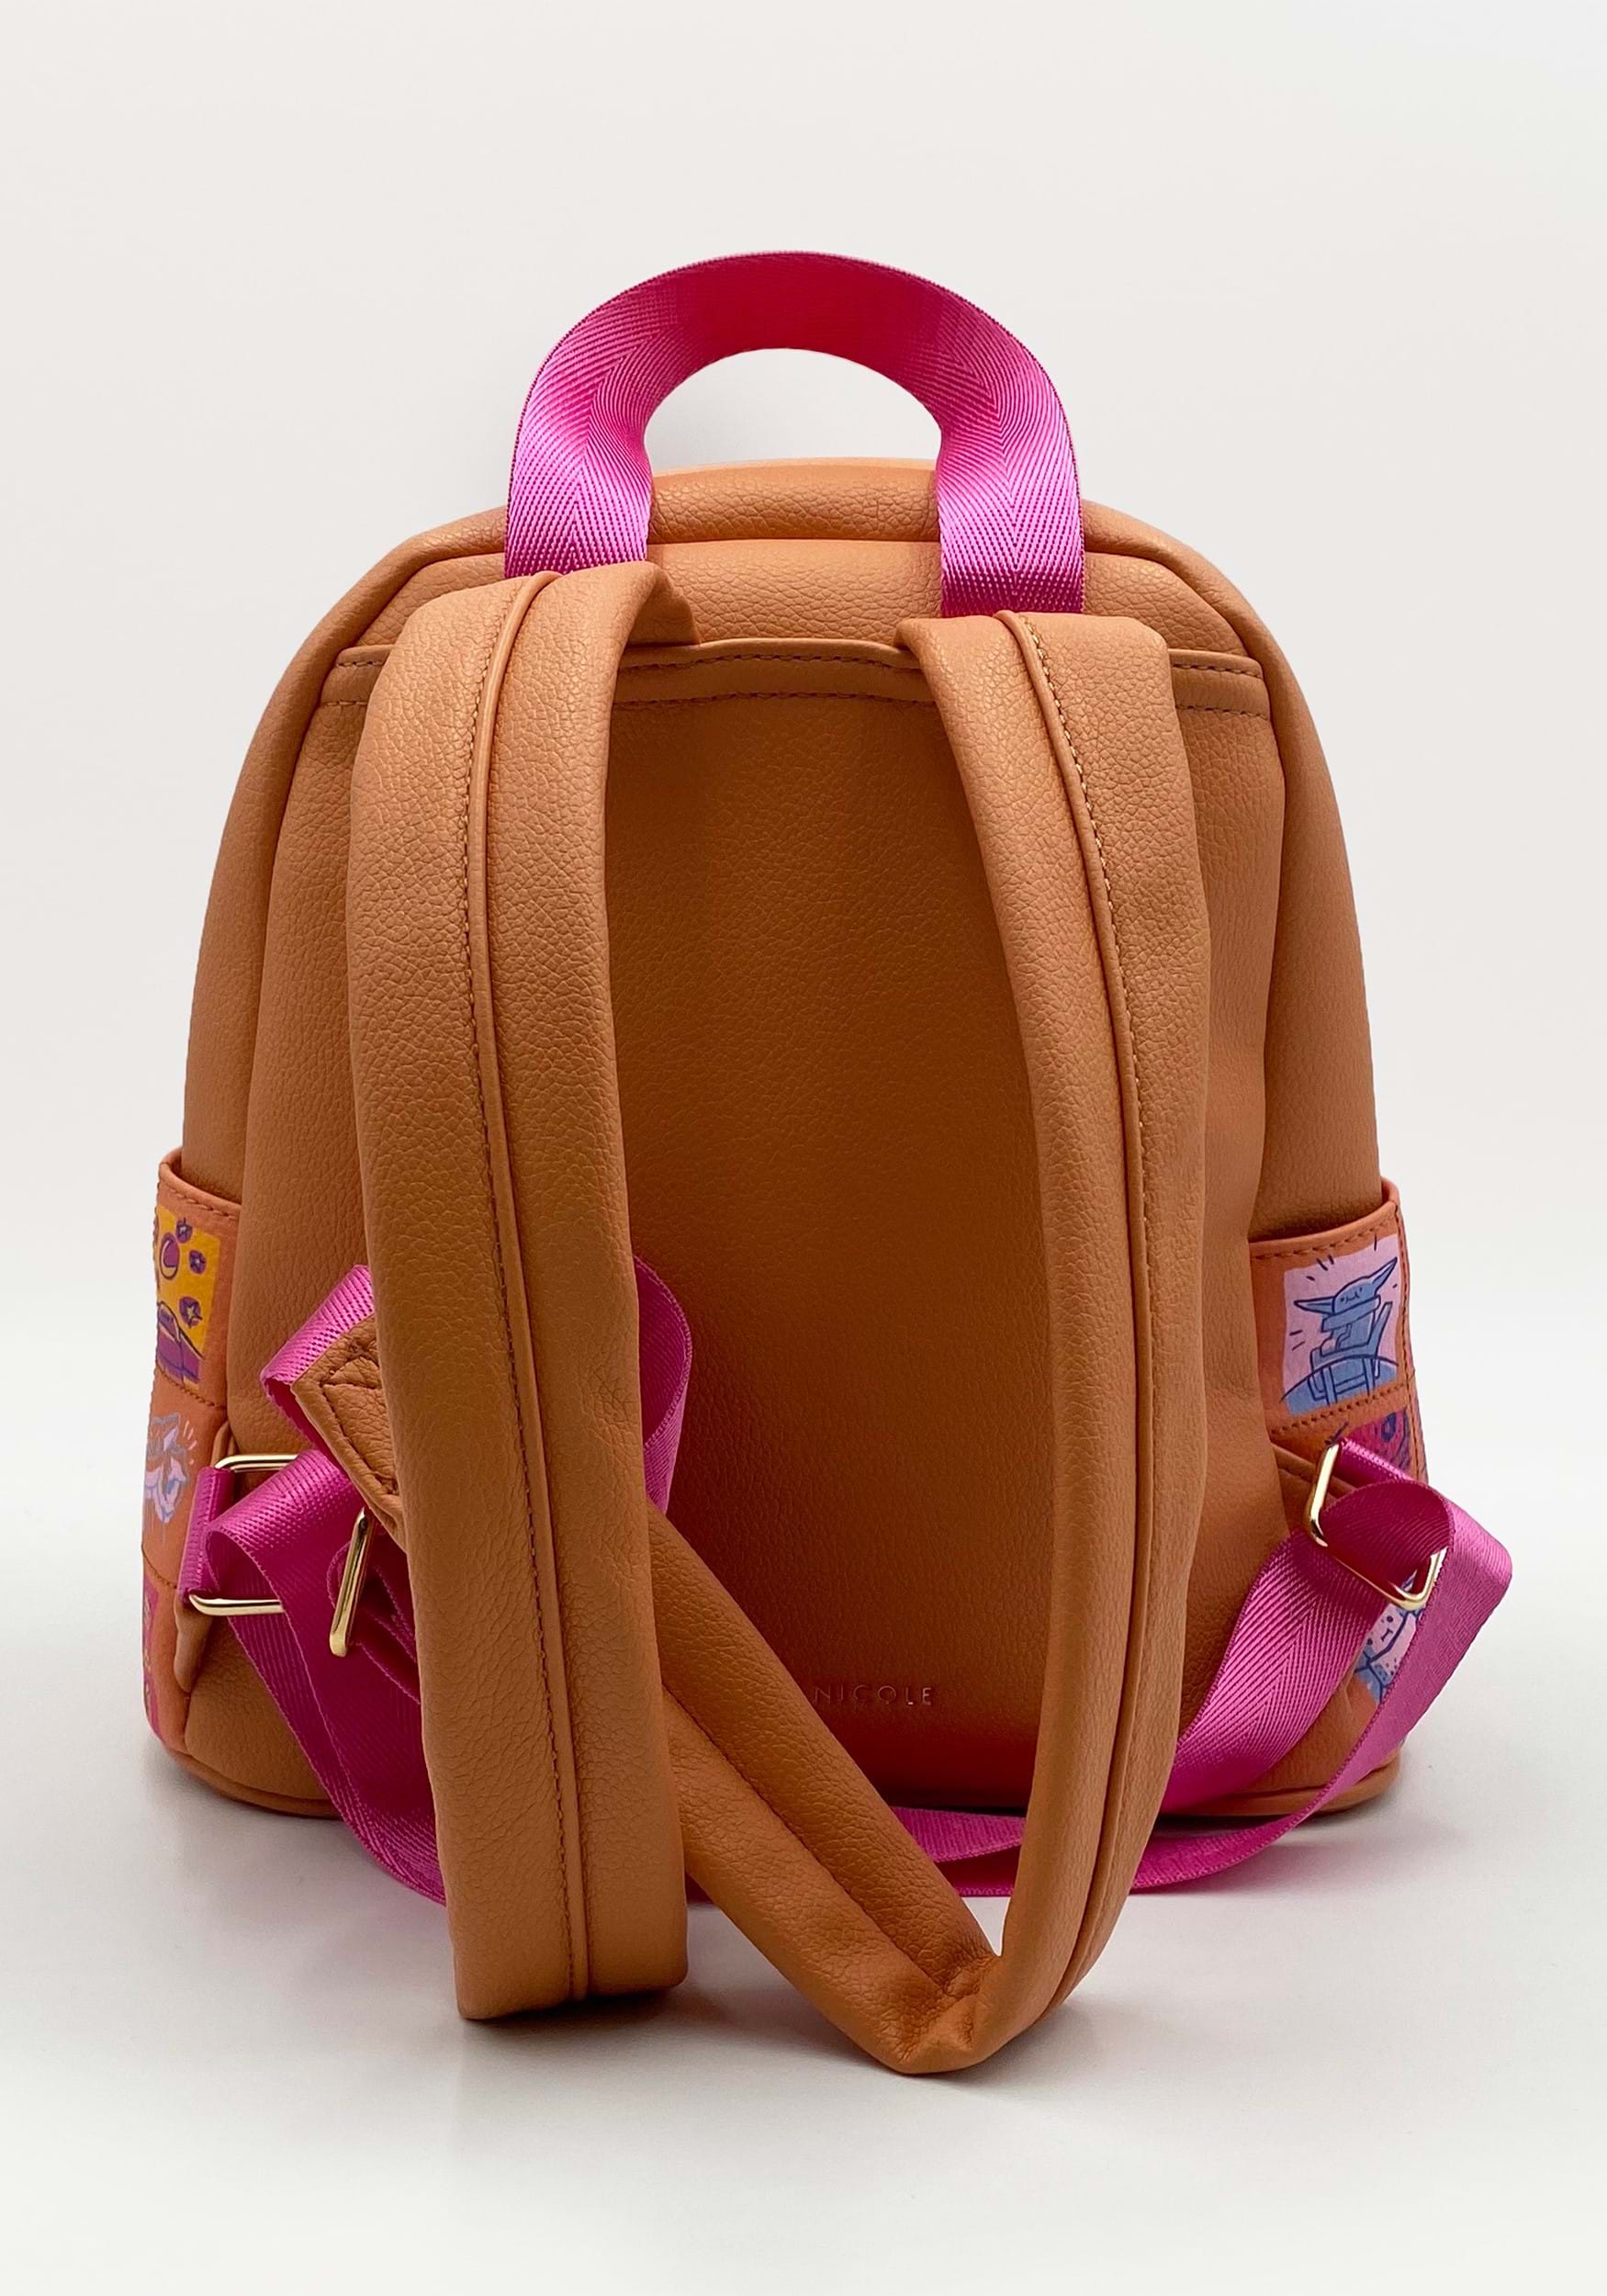 Danielle Nicole Mandalorian The Child Quilted Comic Mini Backpack